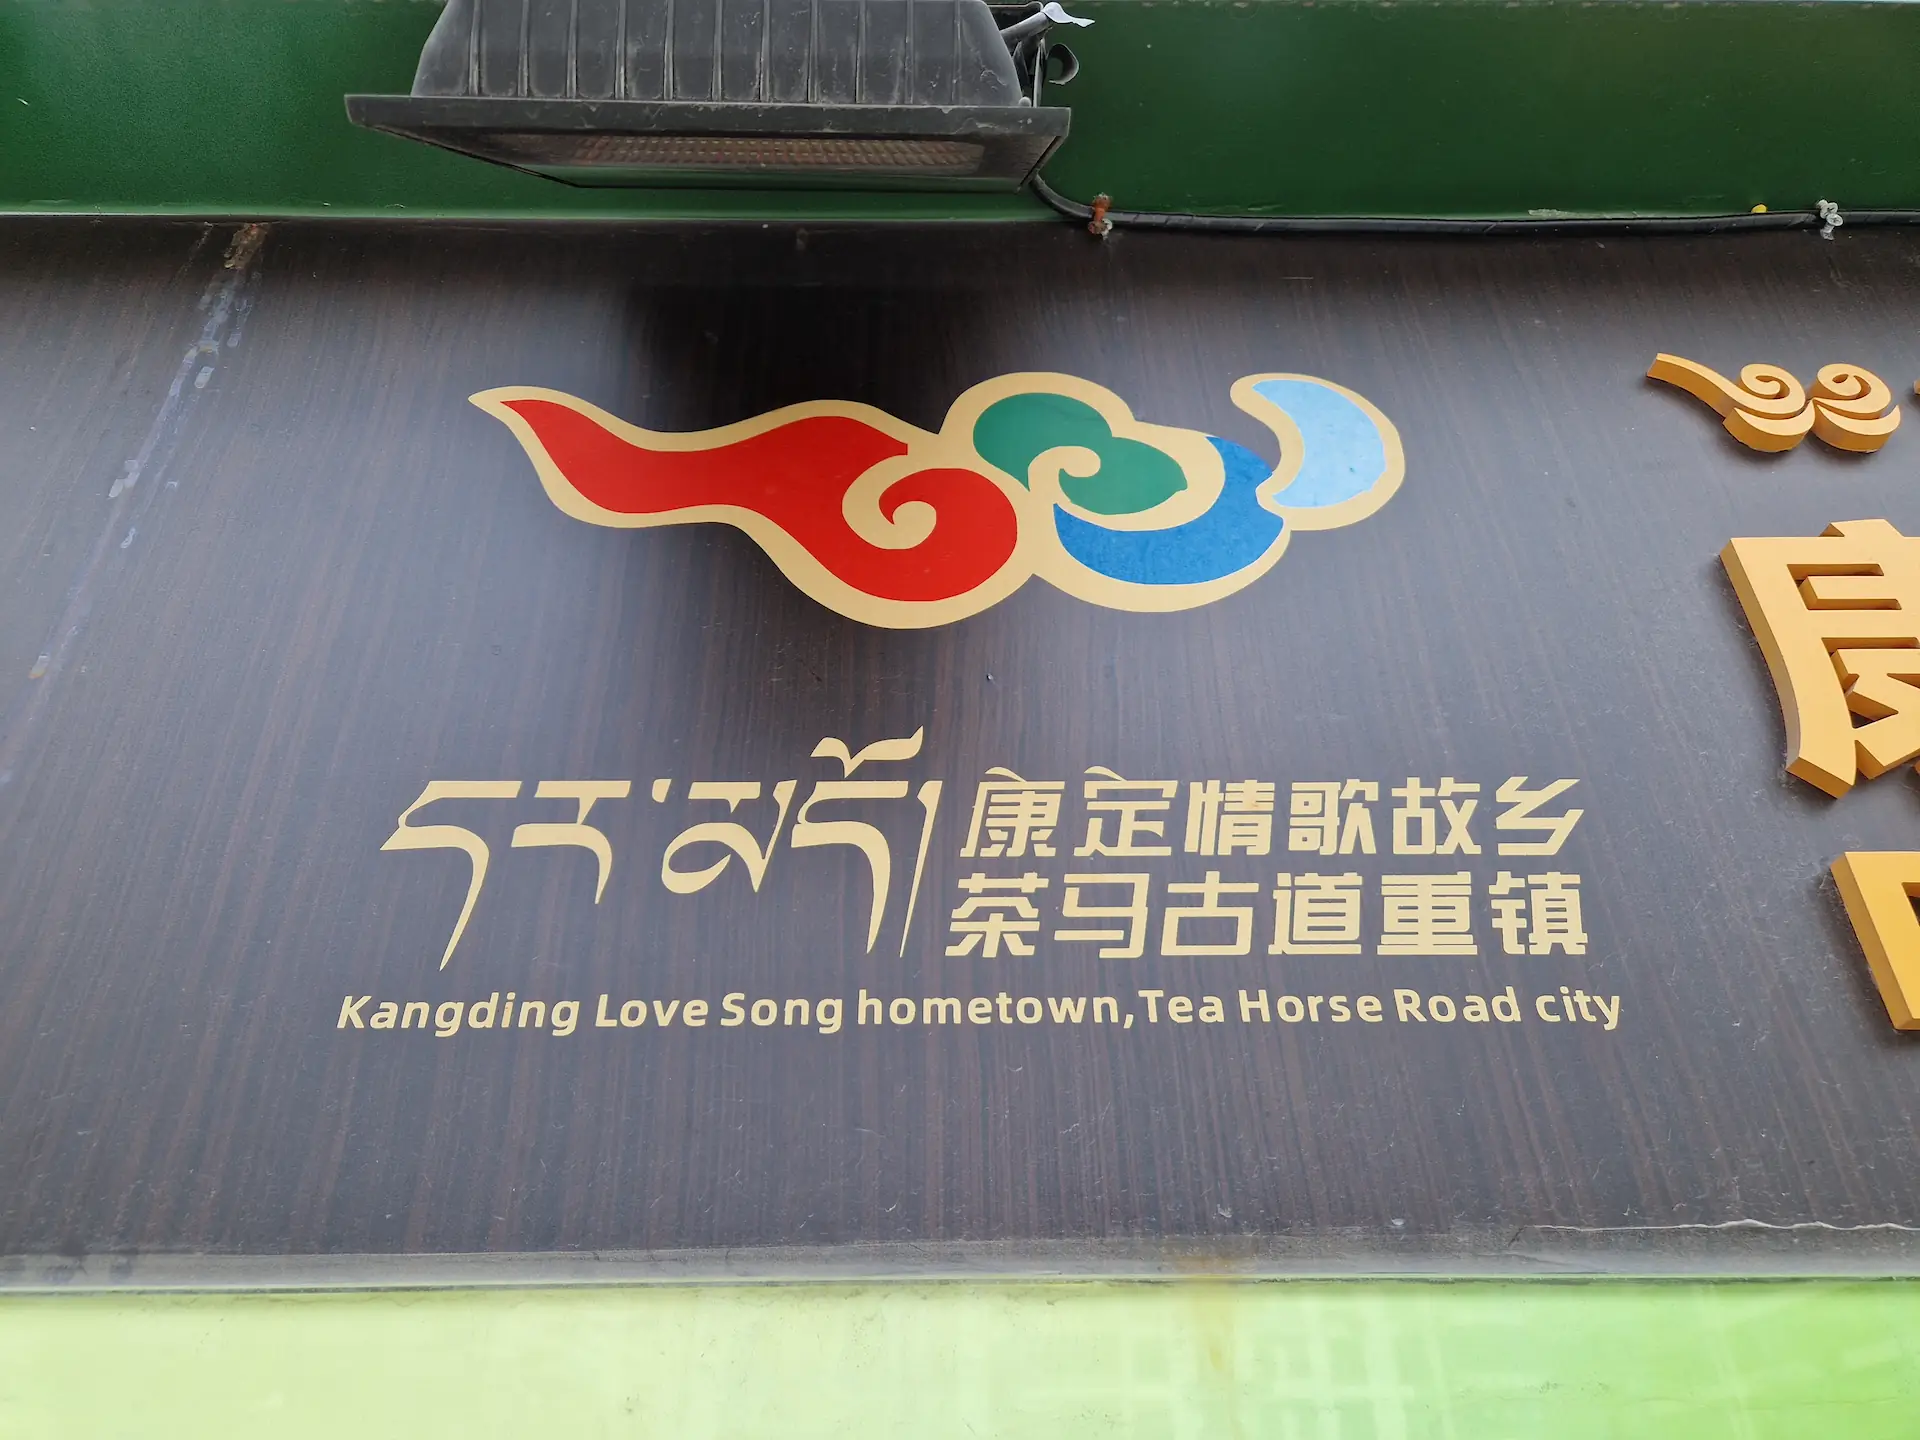 Panneau en chinois et anglais: "Kanging Love Song hometown, Tea Horse Road city"